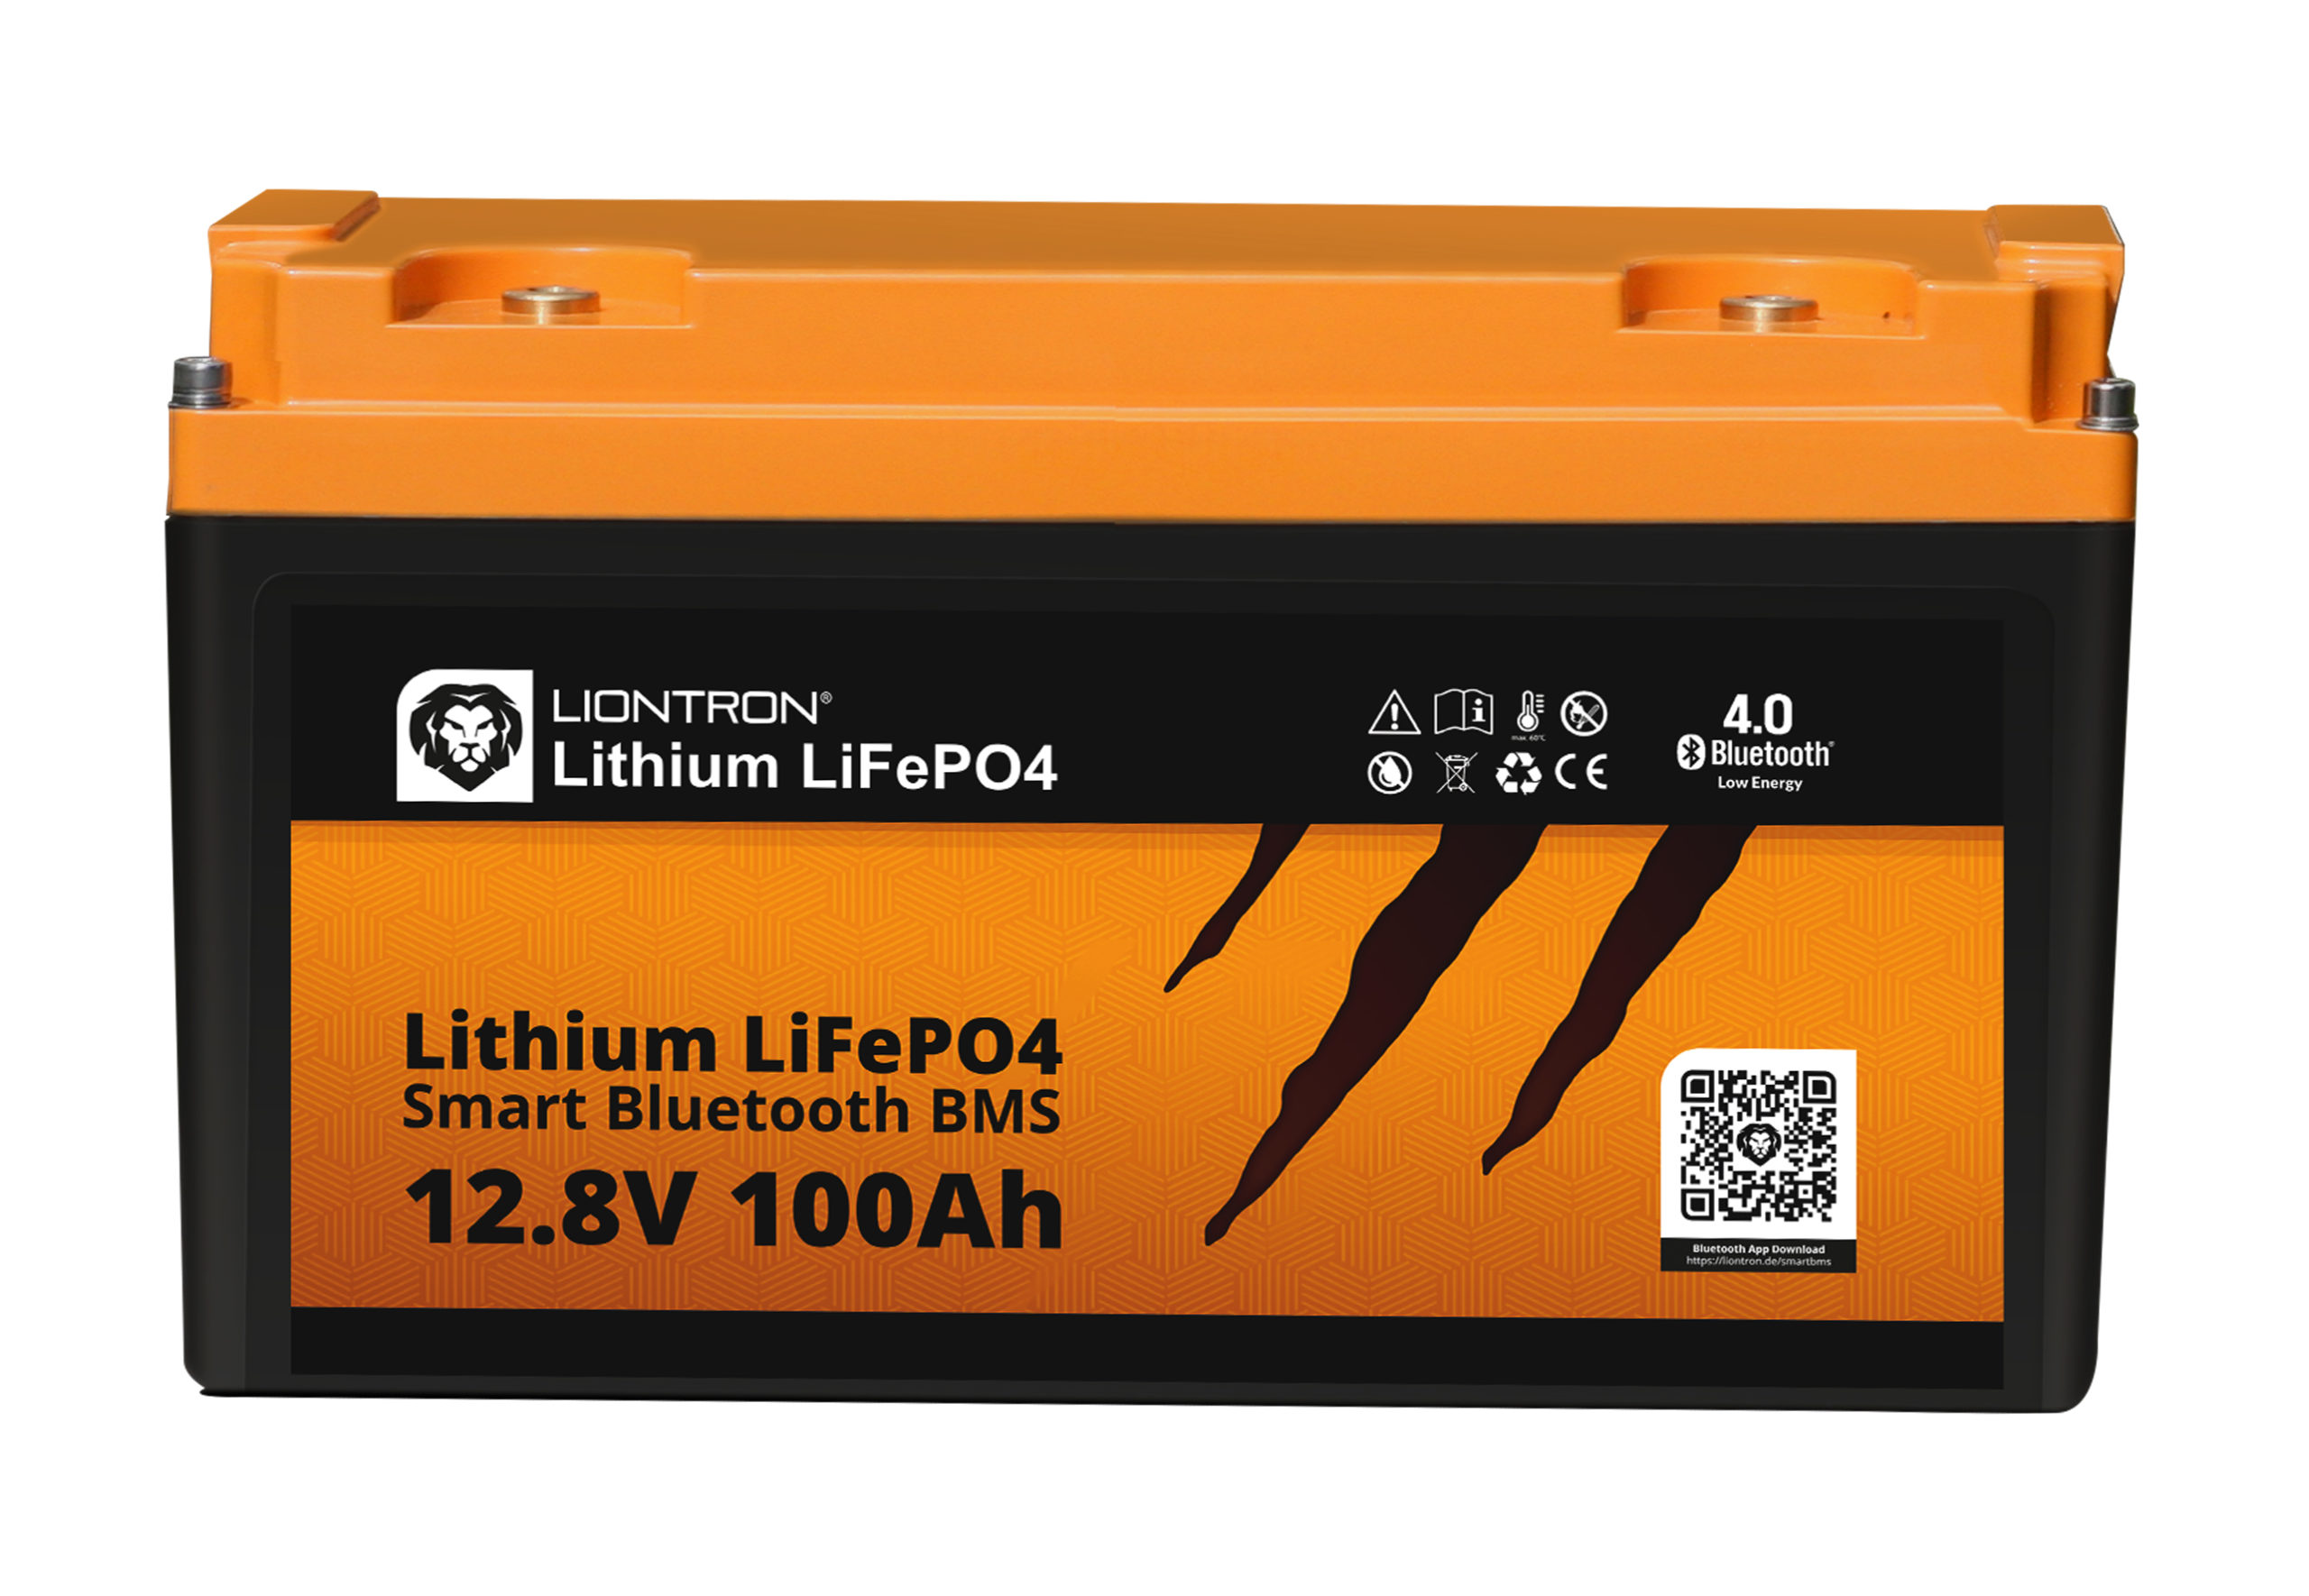 Ultimatron Lithium Batterie LiFePO4 12.8V 100Ah Smart BMS mit